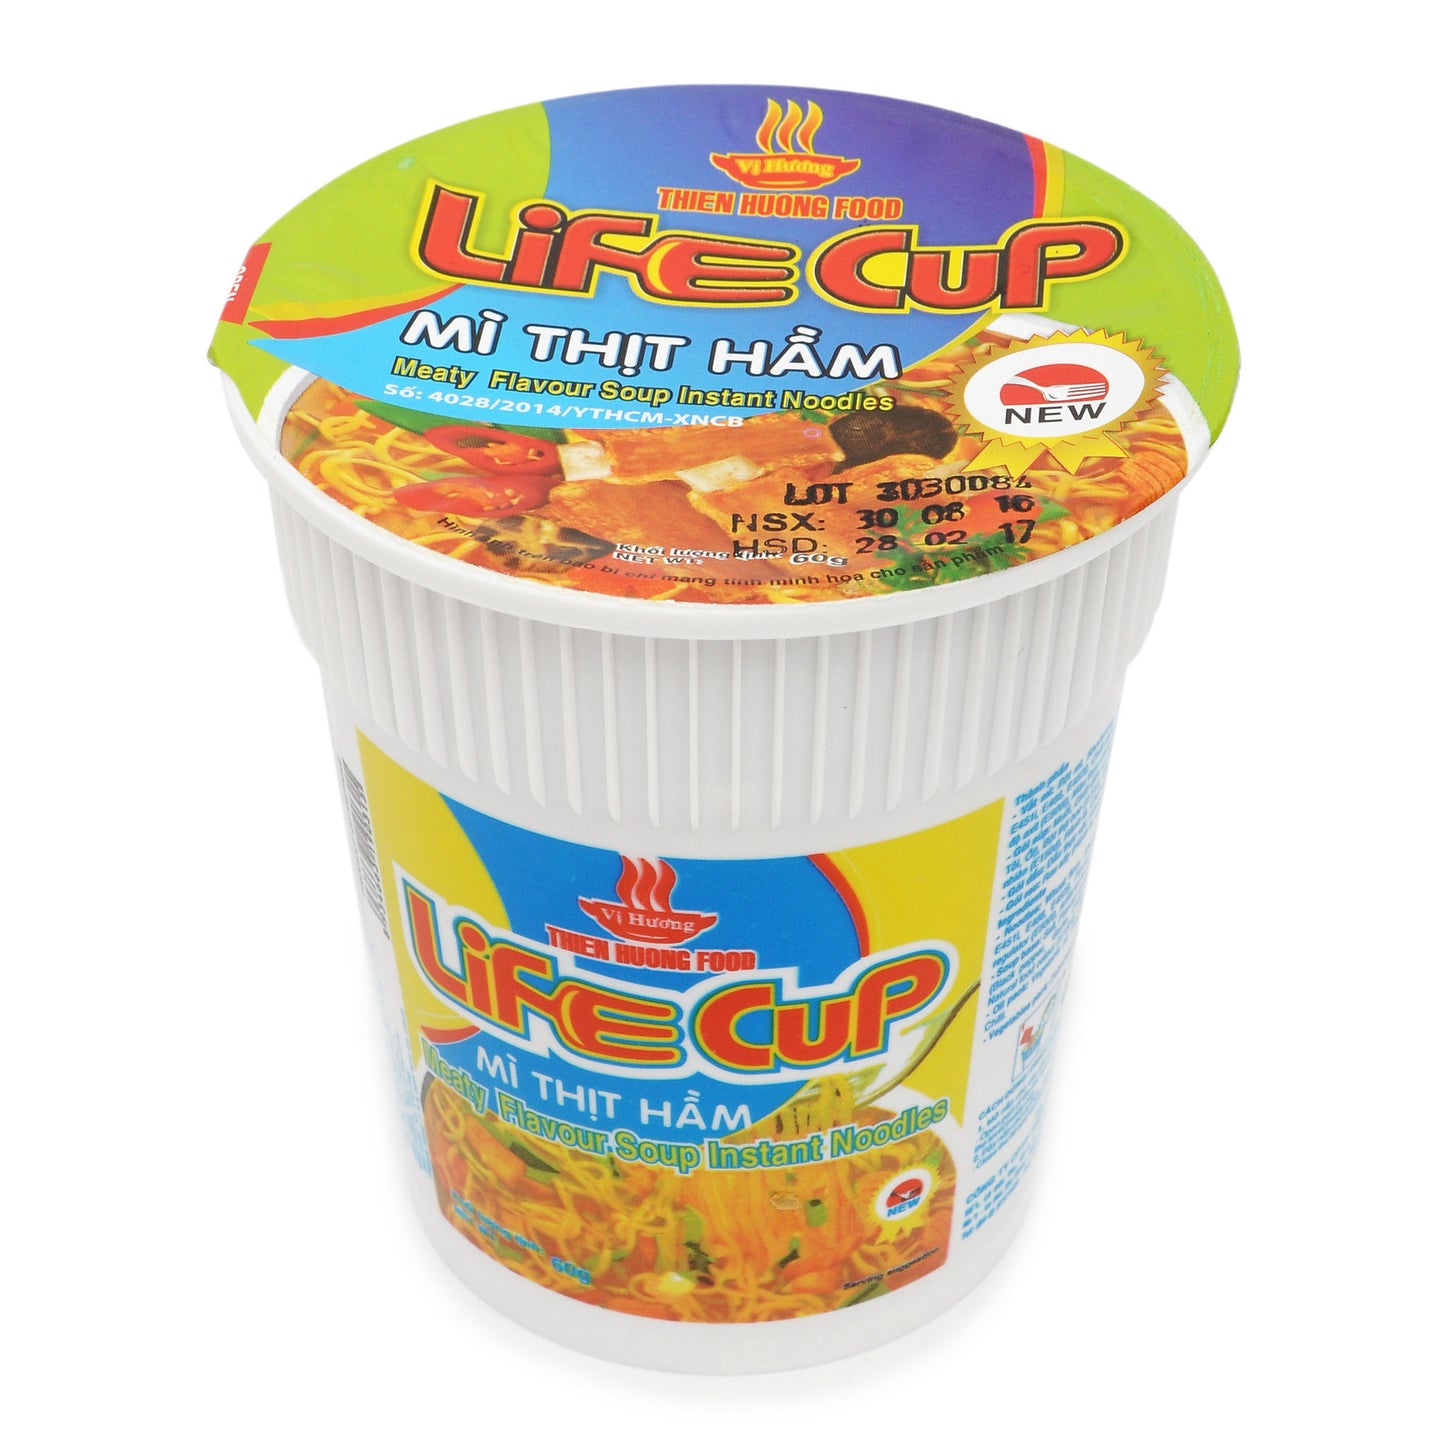 Thien Huong Food “Life Cup” Meaty Flavour Soup Instant Cup Noodles 60 gram